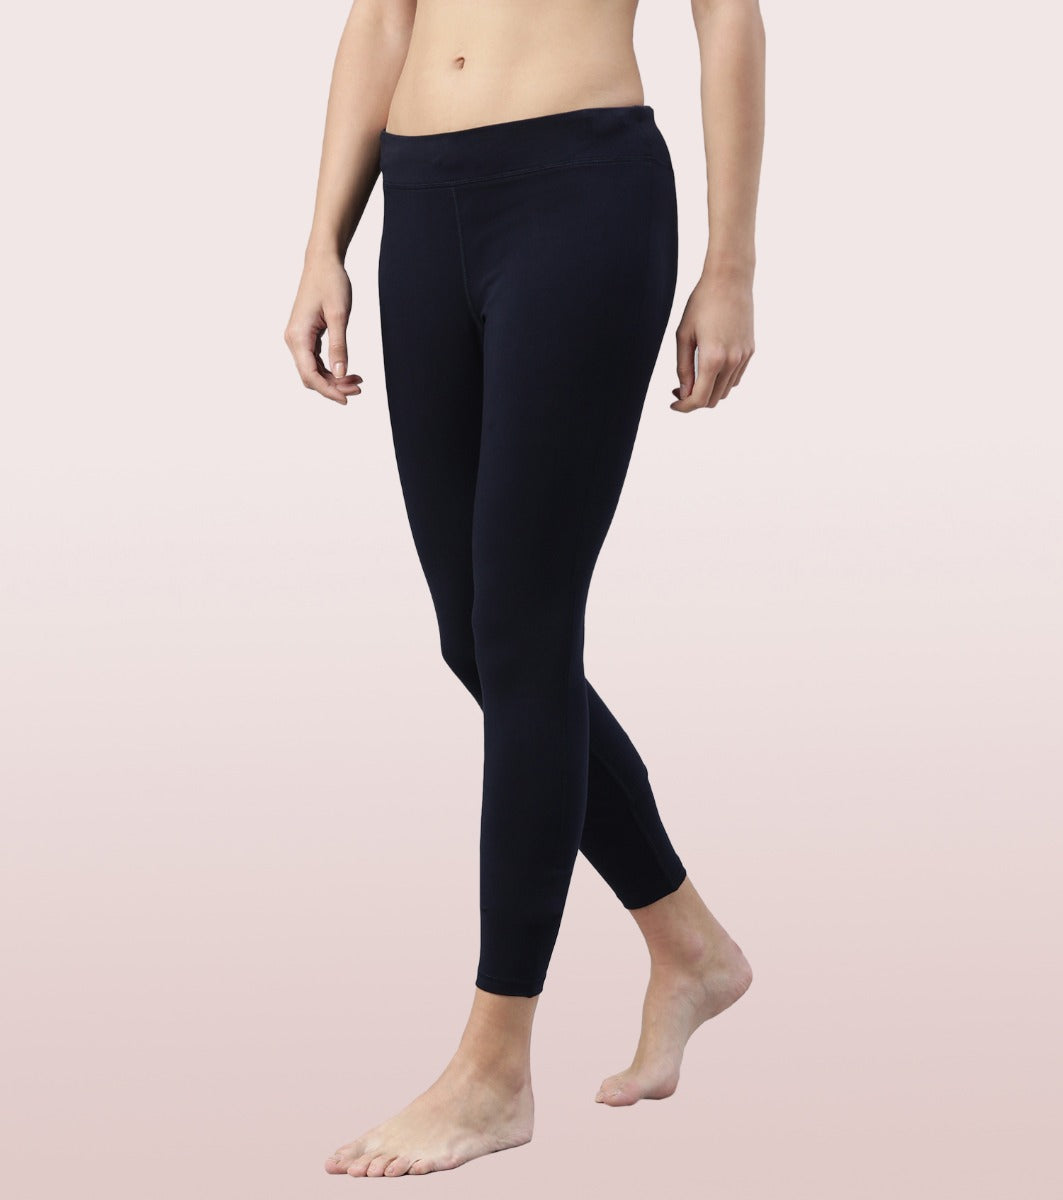 Yoga Legging | Mid Rise Pull-On Lounge Legging With Adjustable Drawstring